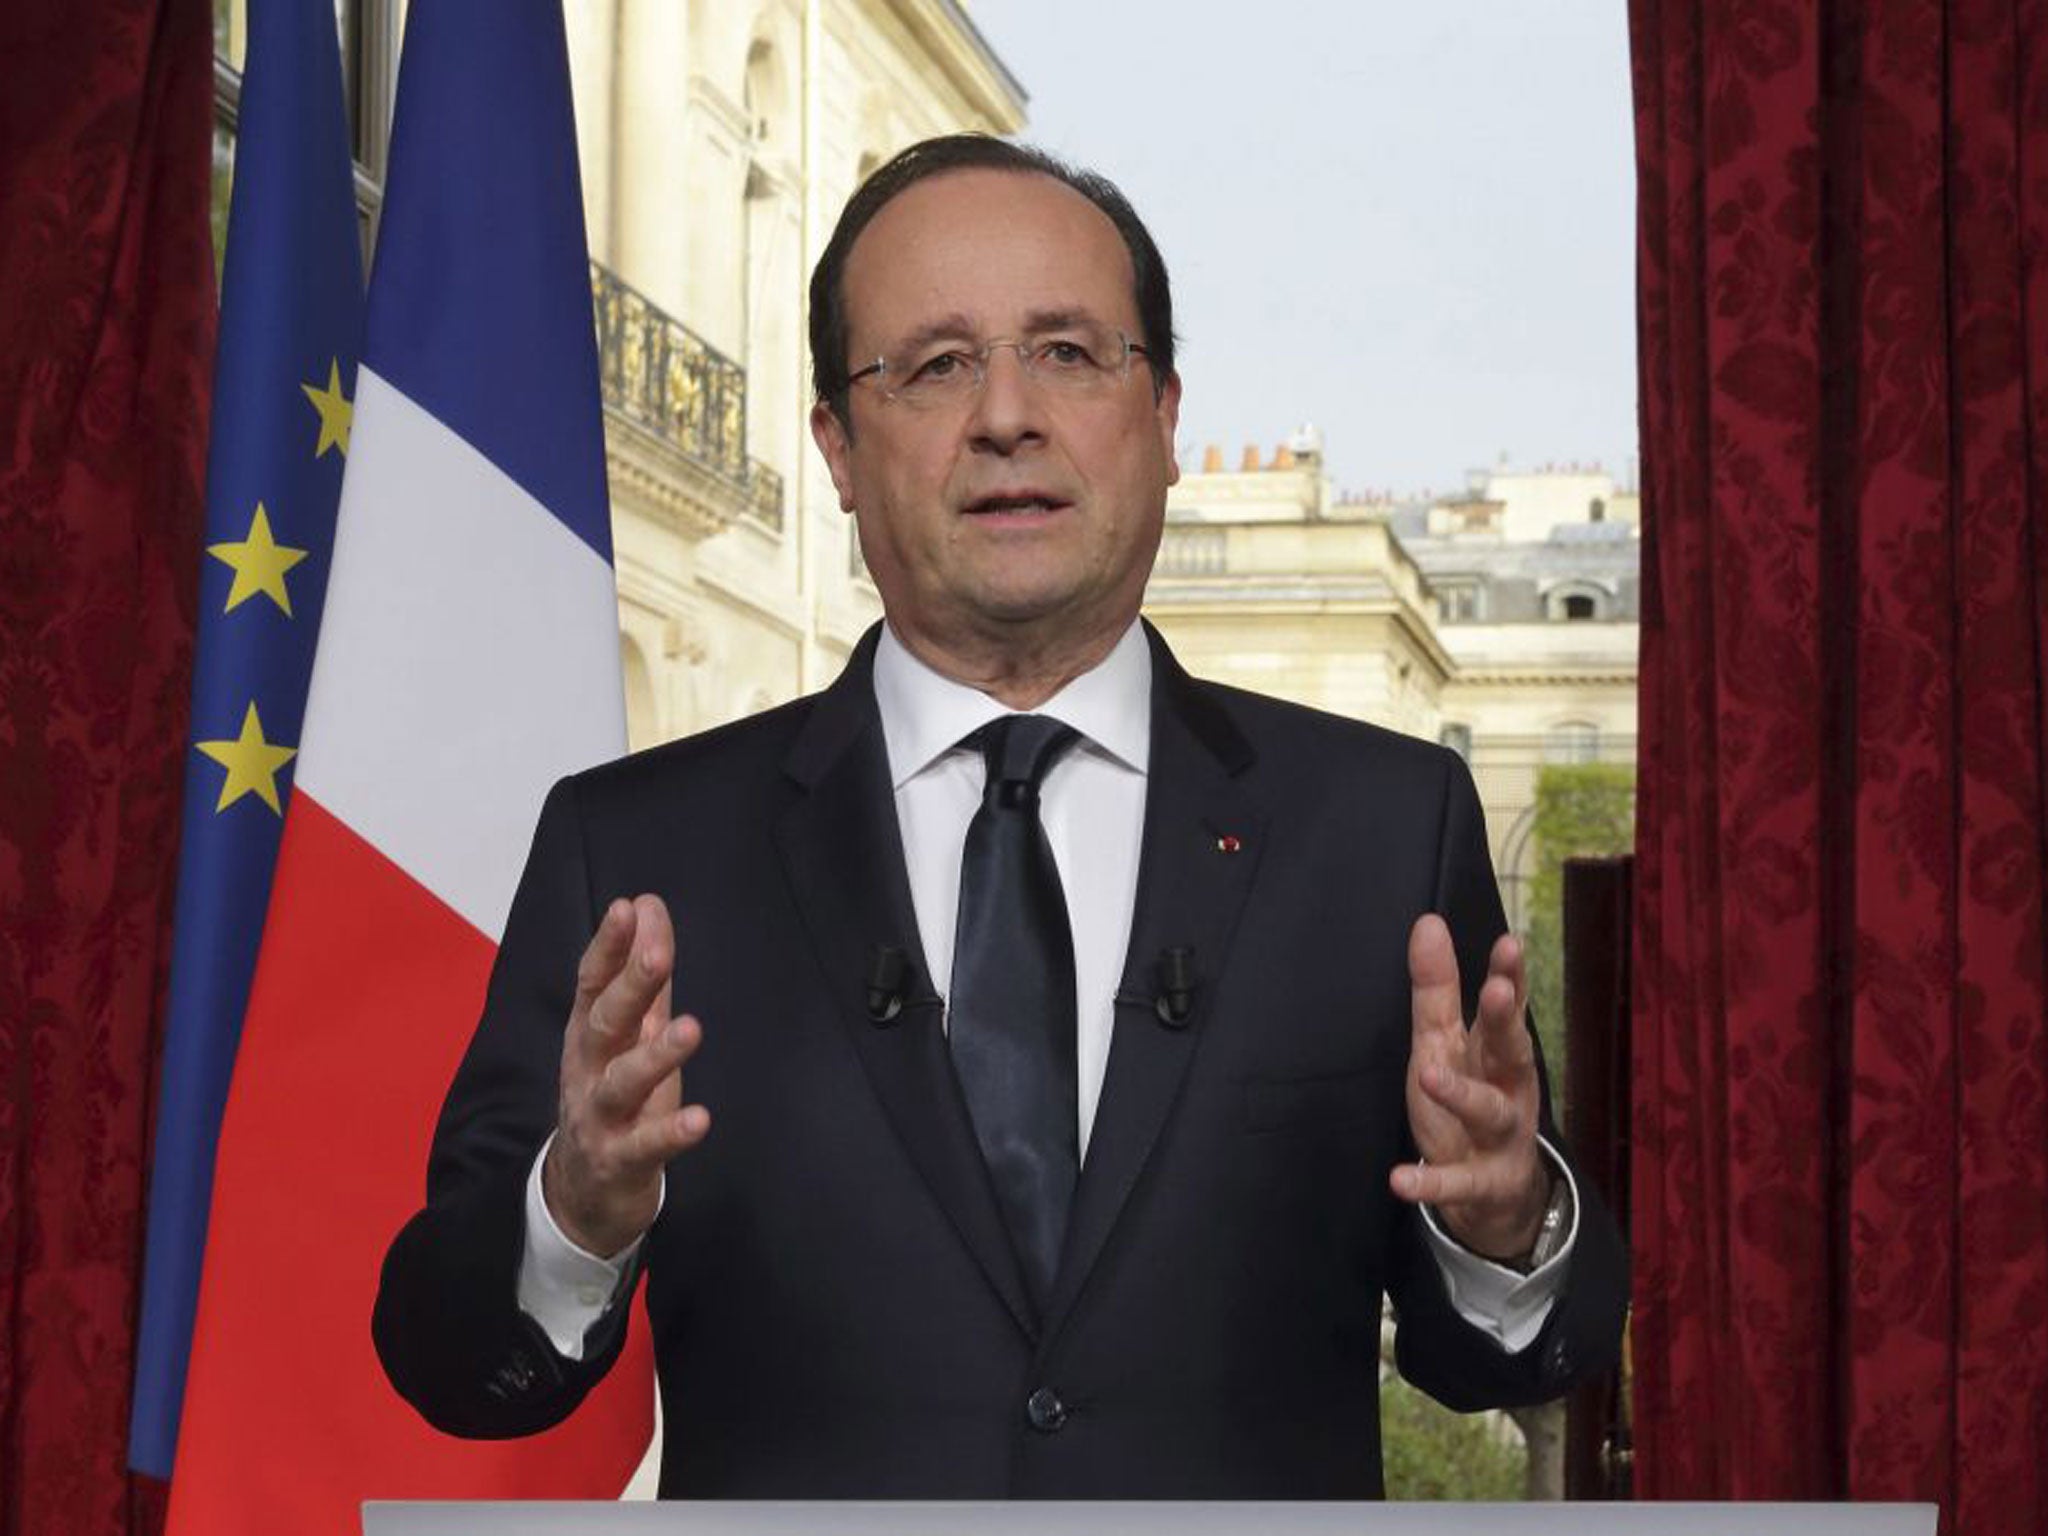 François Hollande addresses the nation from the Elysée Palace last night